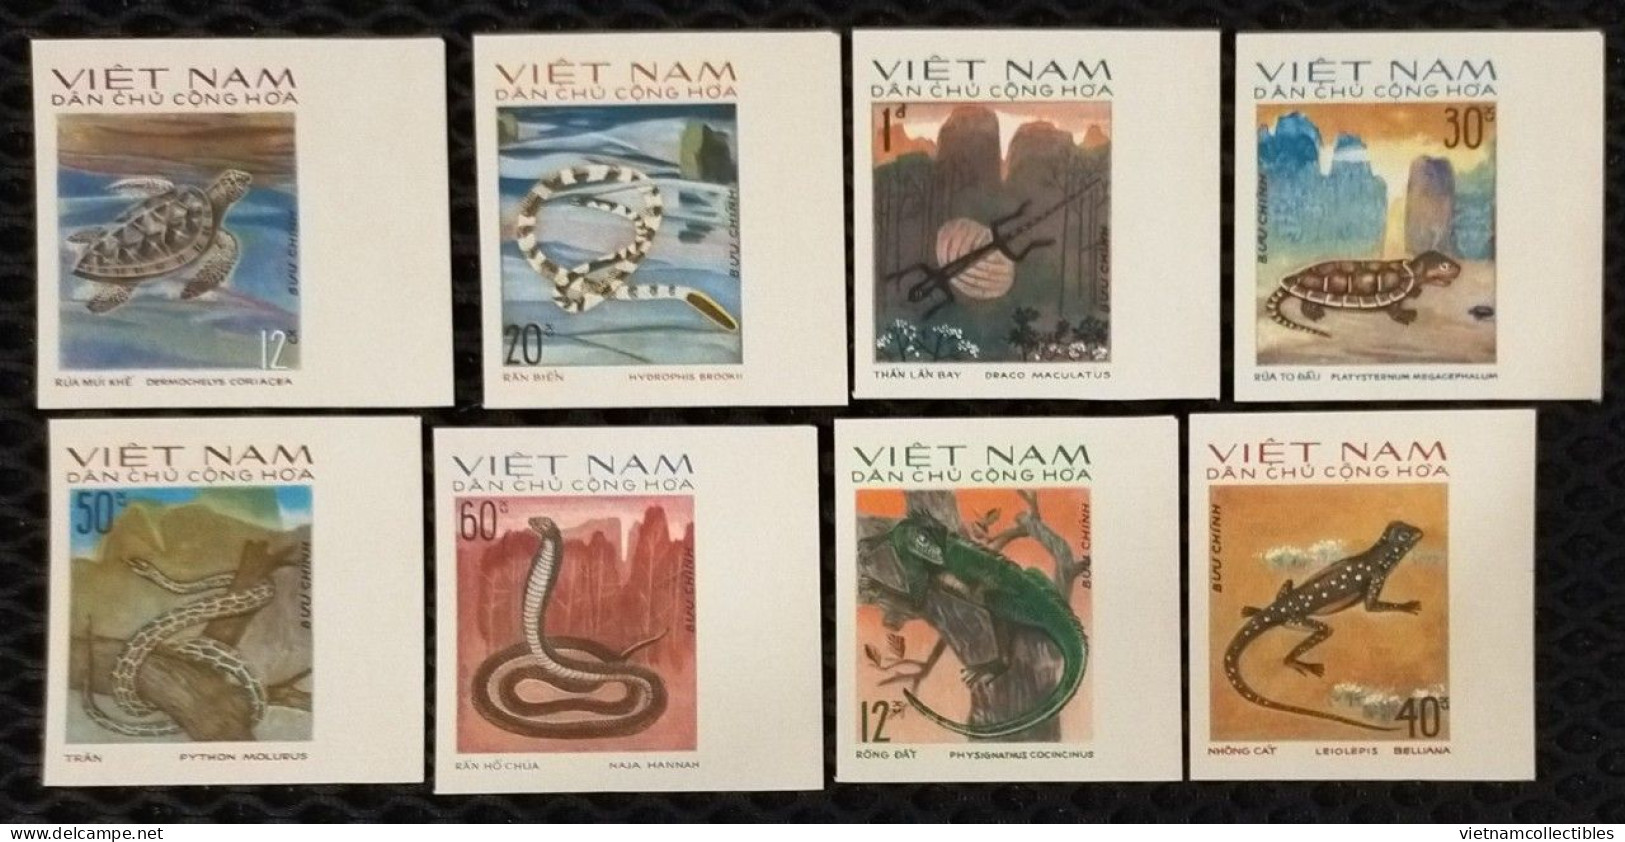 North Vietnam Viet Nam MNH Imperf Stamps 1975 : Reptile / Tortoise / Snake / King Cobra / Lizard / Turtle (Ms305) - Viêt-Nam